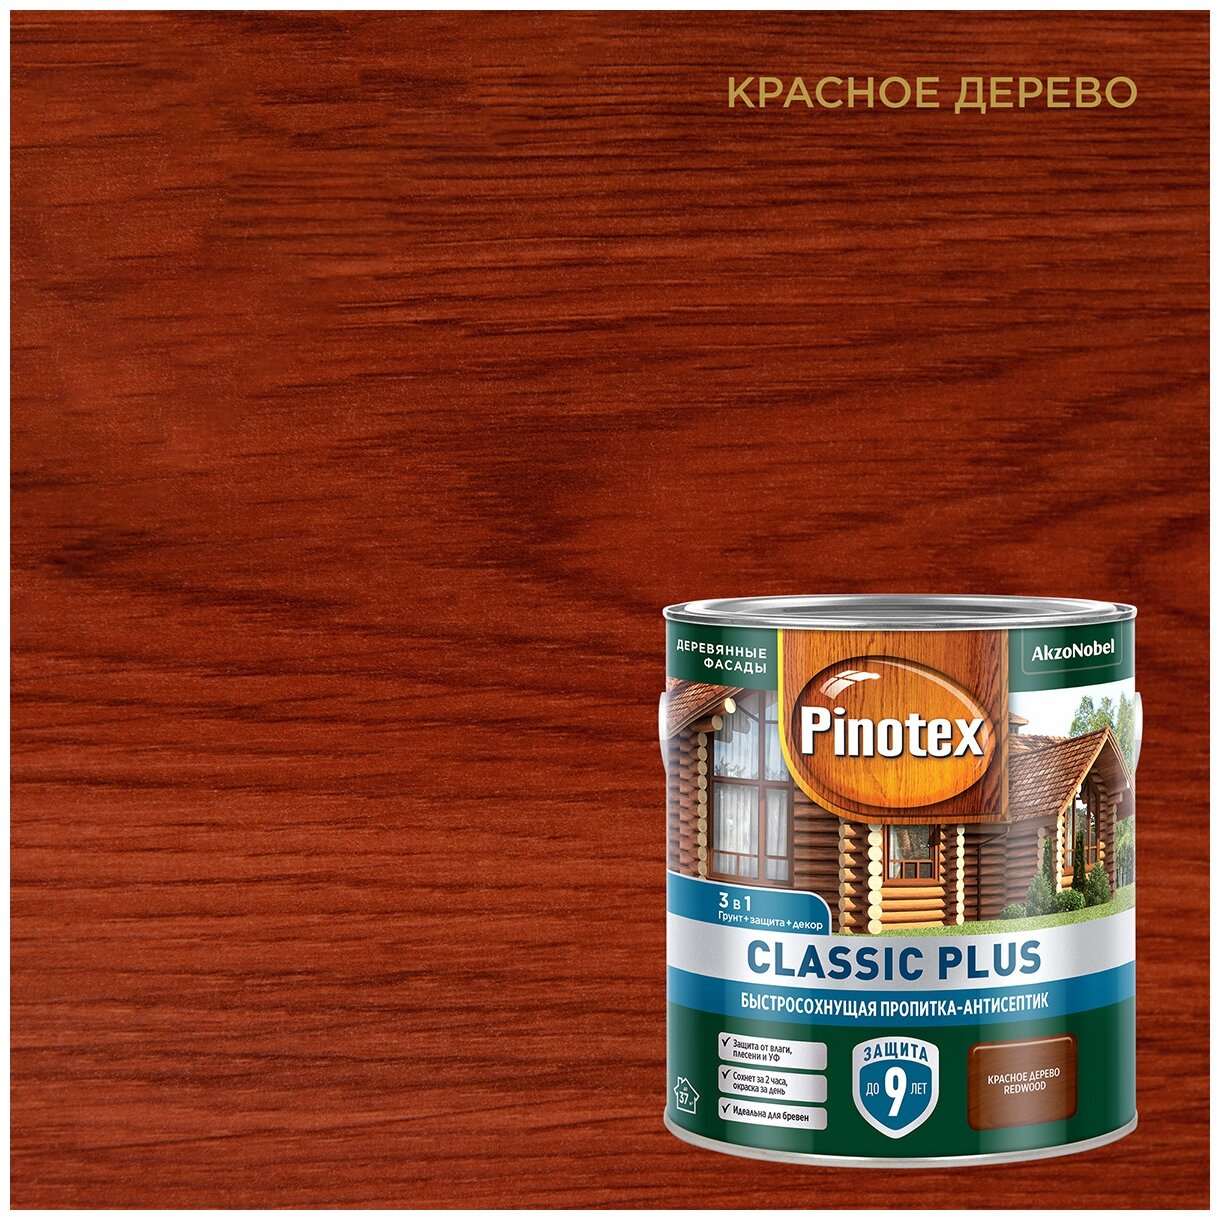 Пропитка-антисептик быстросохнущая Pinotex Classic Plus Красное дерево 2,5 л